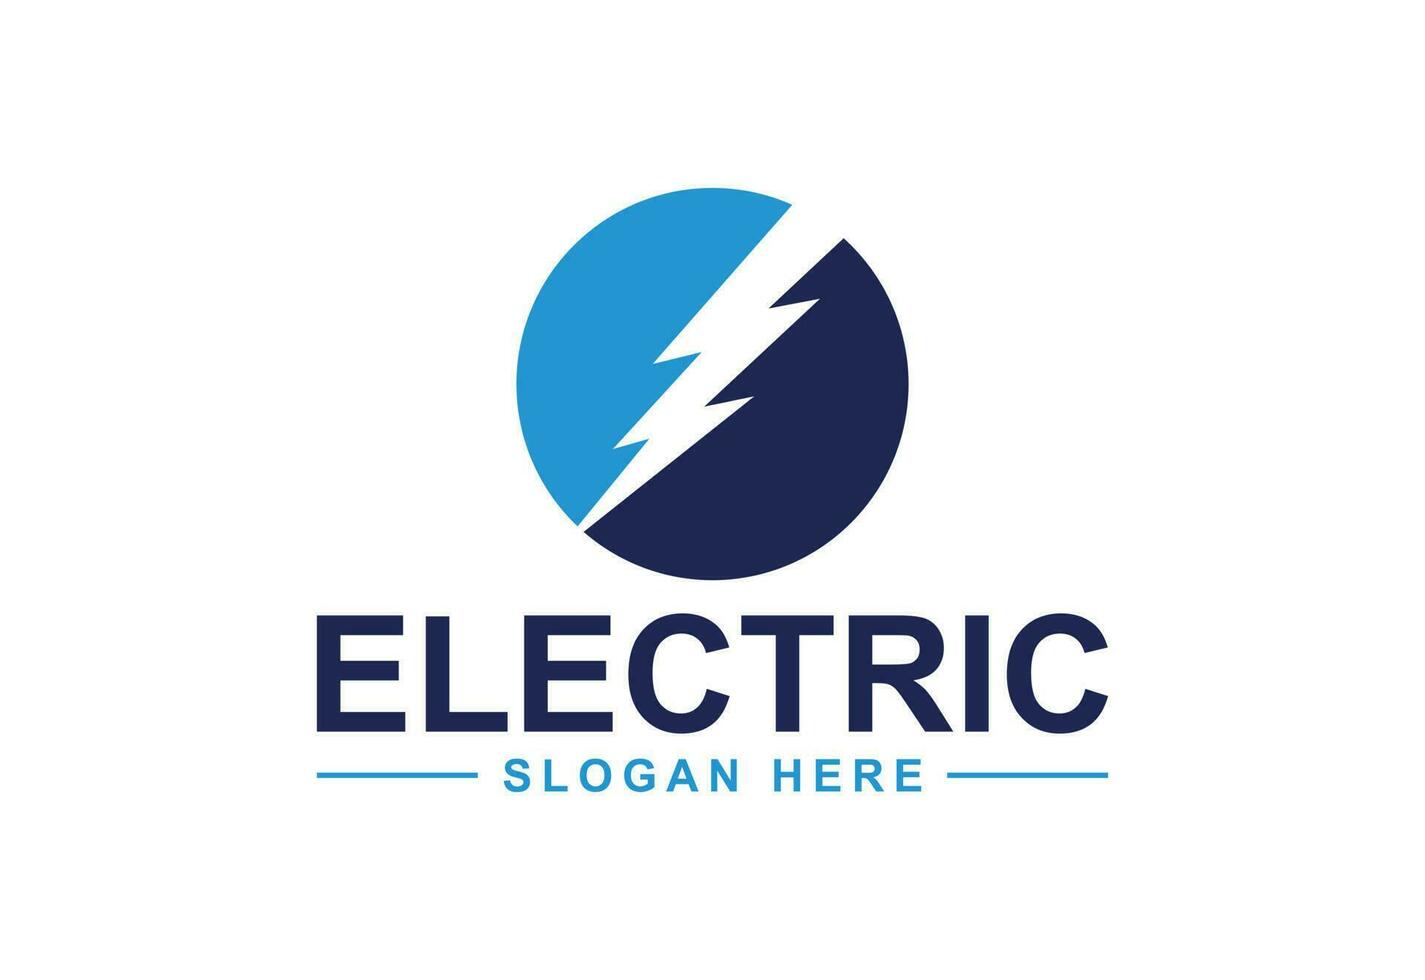 elektrisch Logo, Beleuchtung Bolzen , Donner Bolzen Design Logo Vorlage, Vektor Illustration